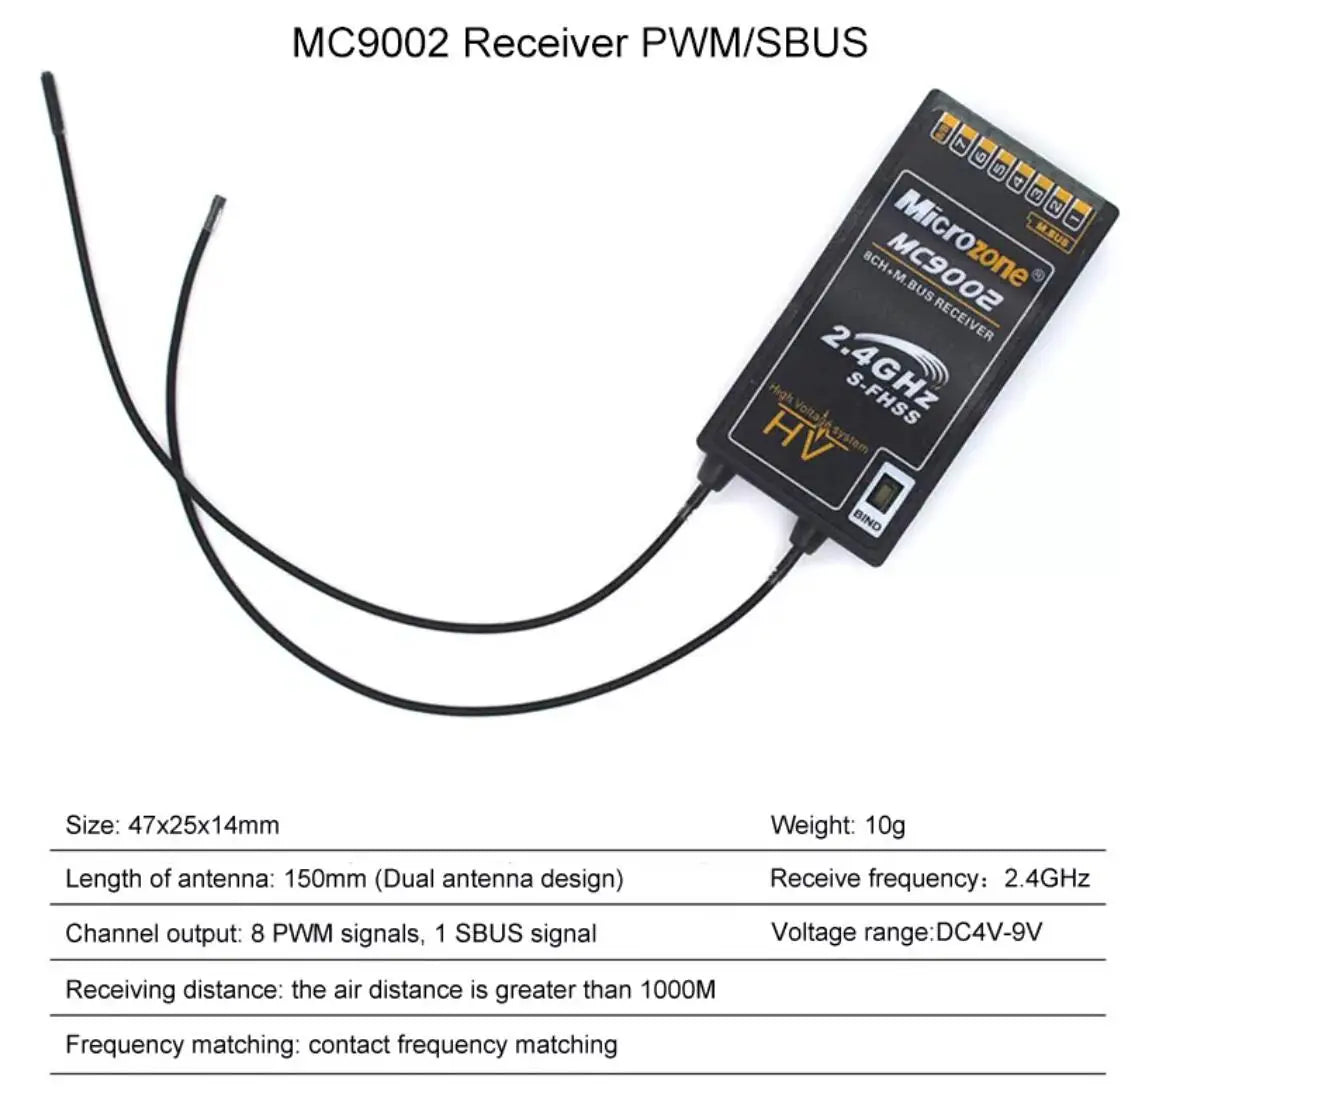 MC9002 Receiver PWMISBUS "M 9 Size: 47x25